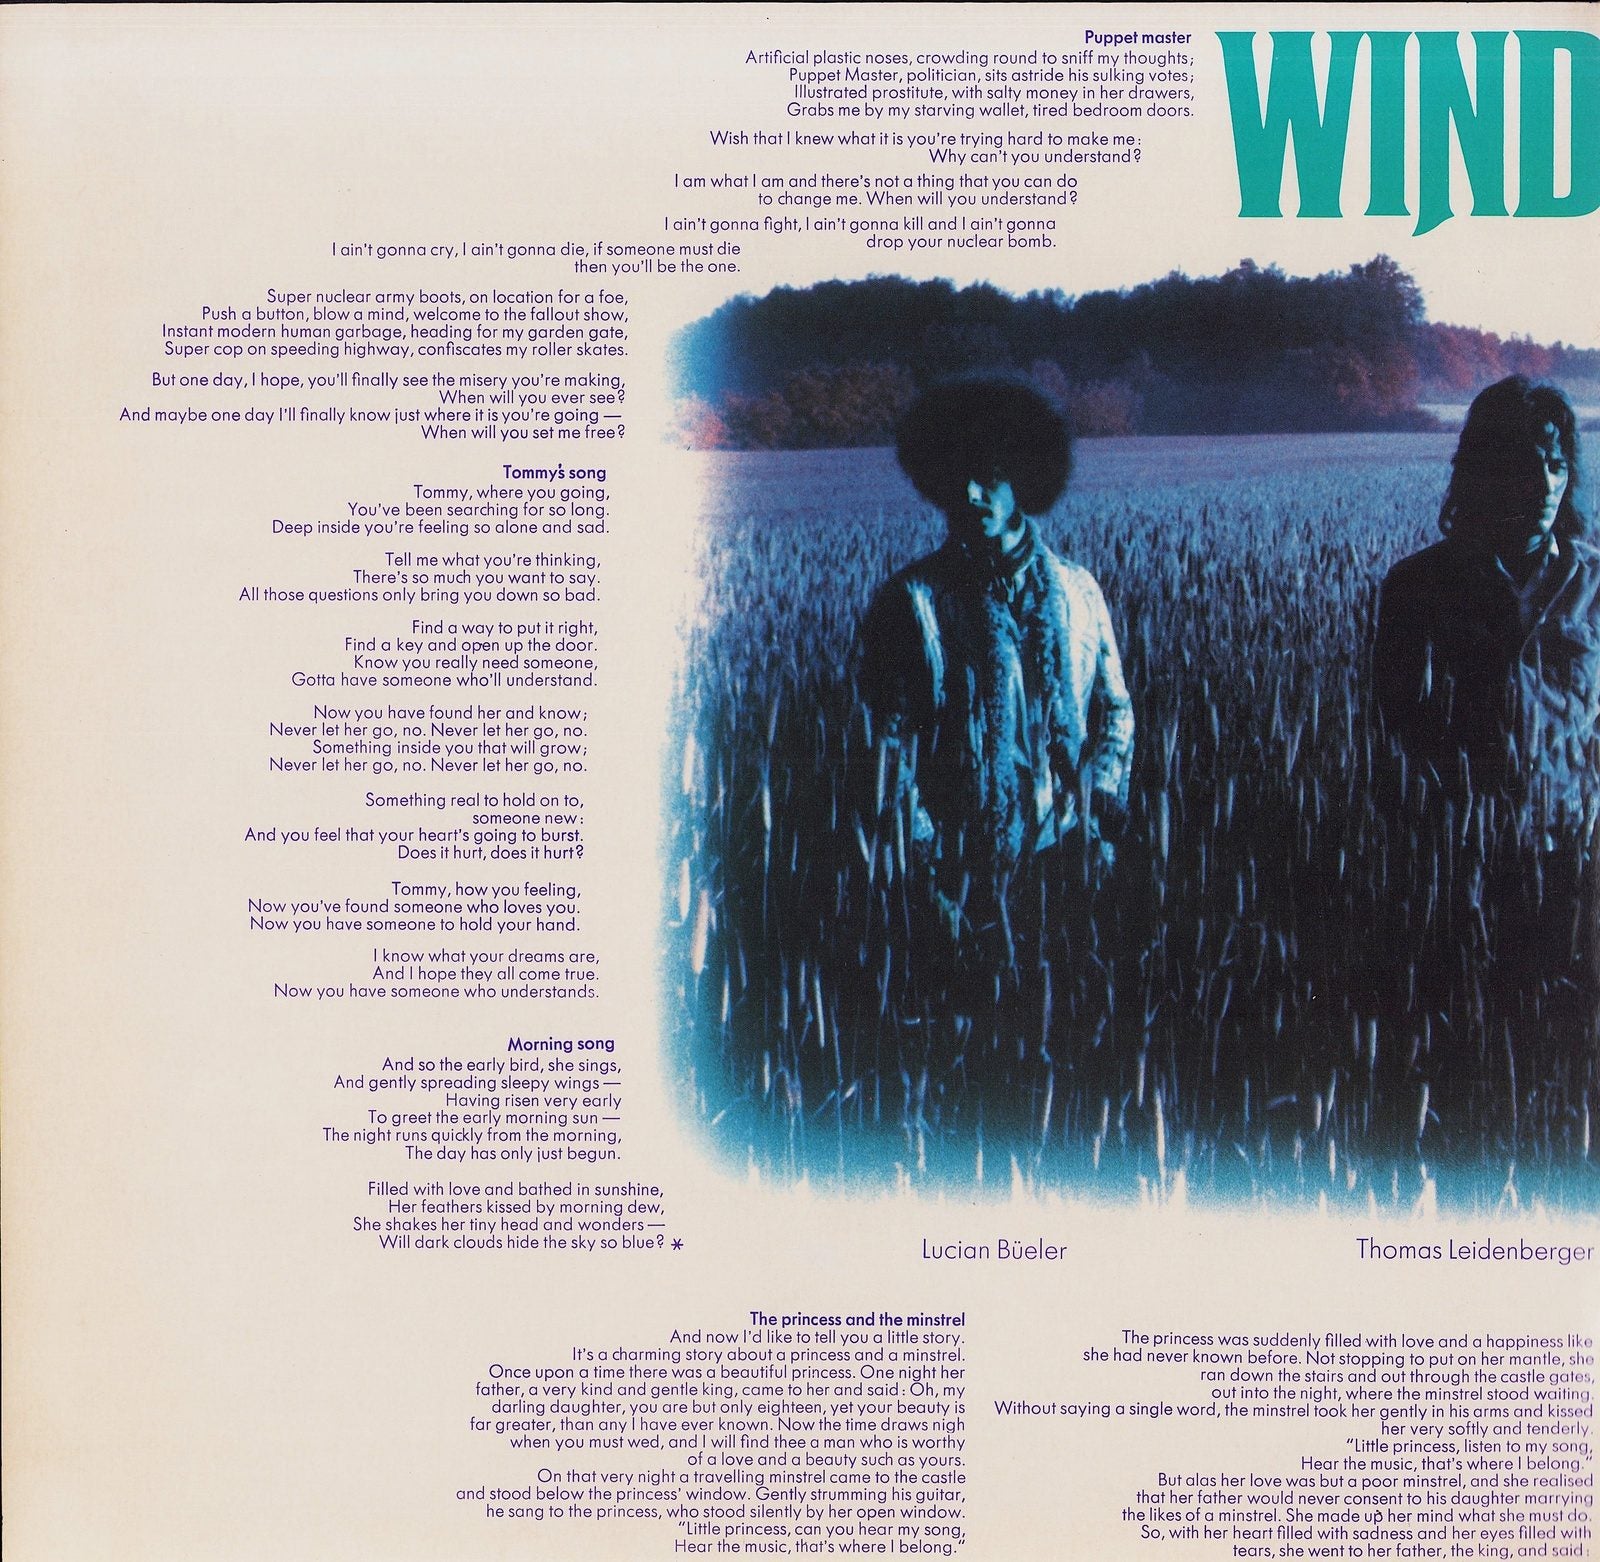 Wind - Morning Vinyl LP